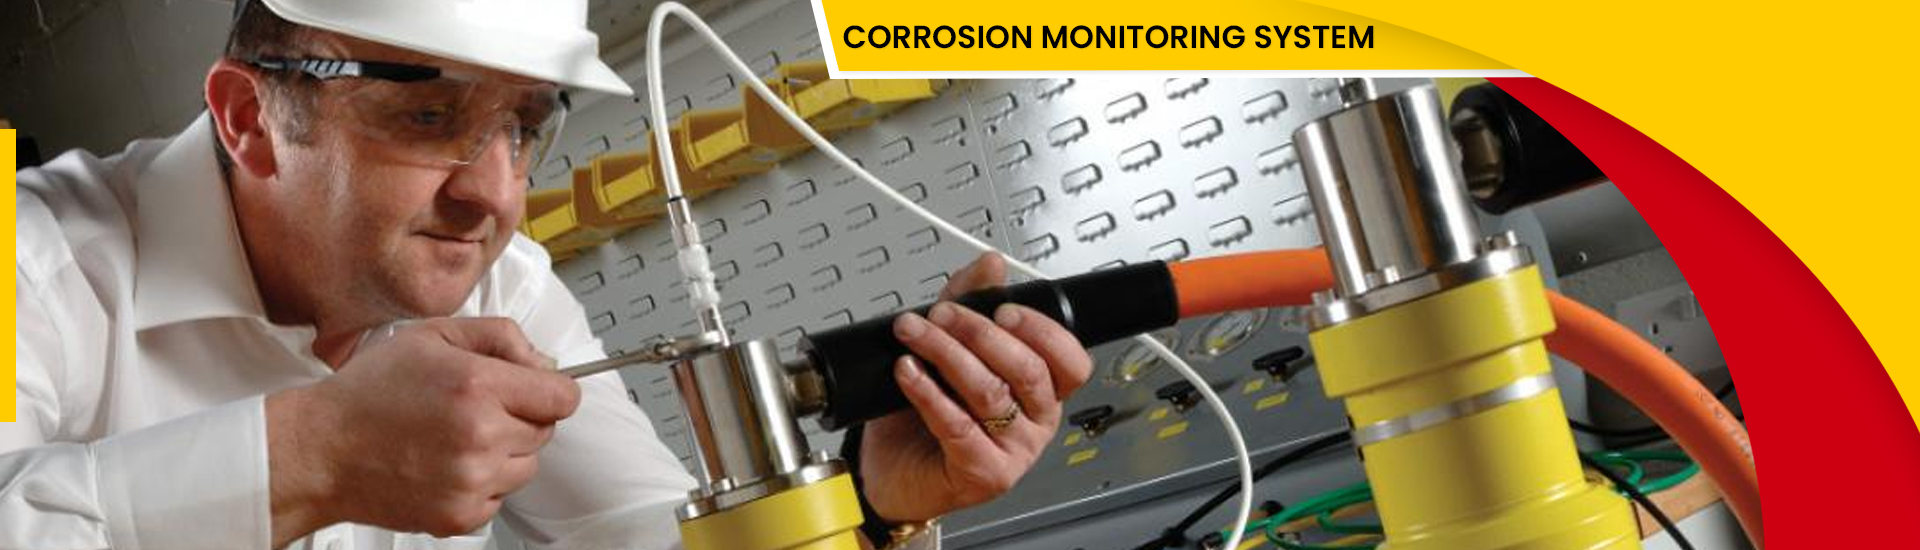 Corrosion Monitoring System